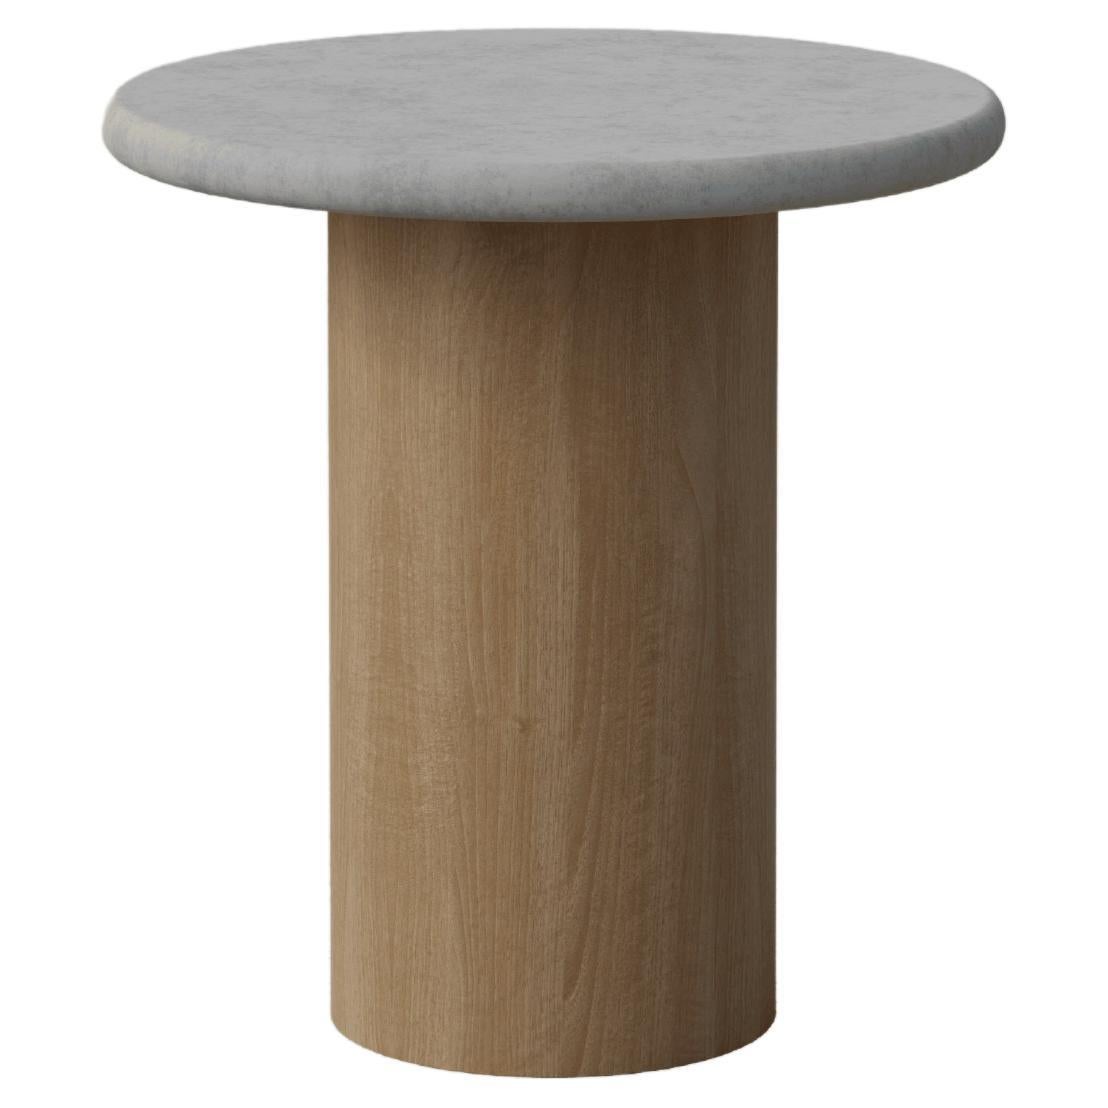 Raindrop Coffee Table, 400, Microcrete / Oak For Sale